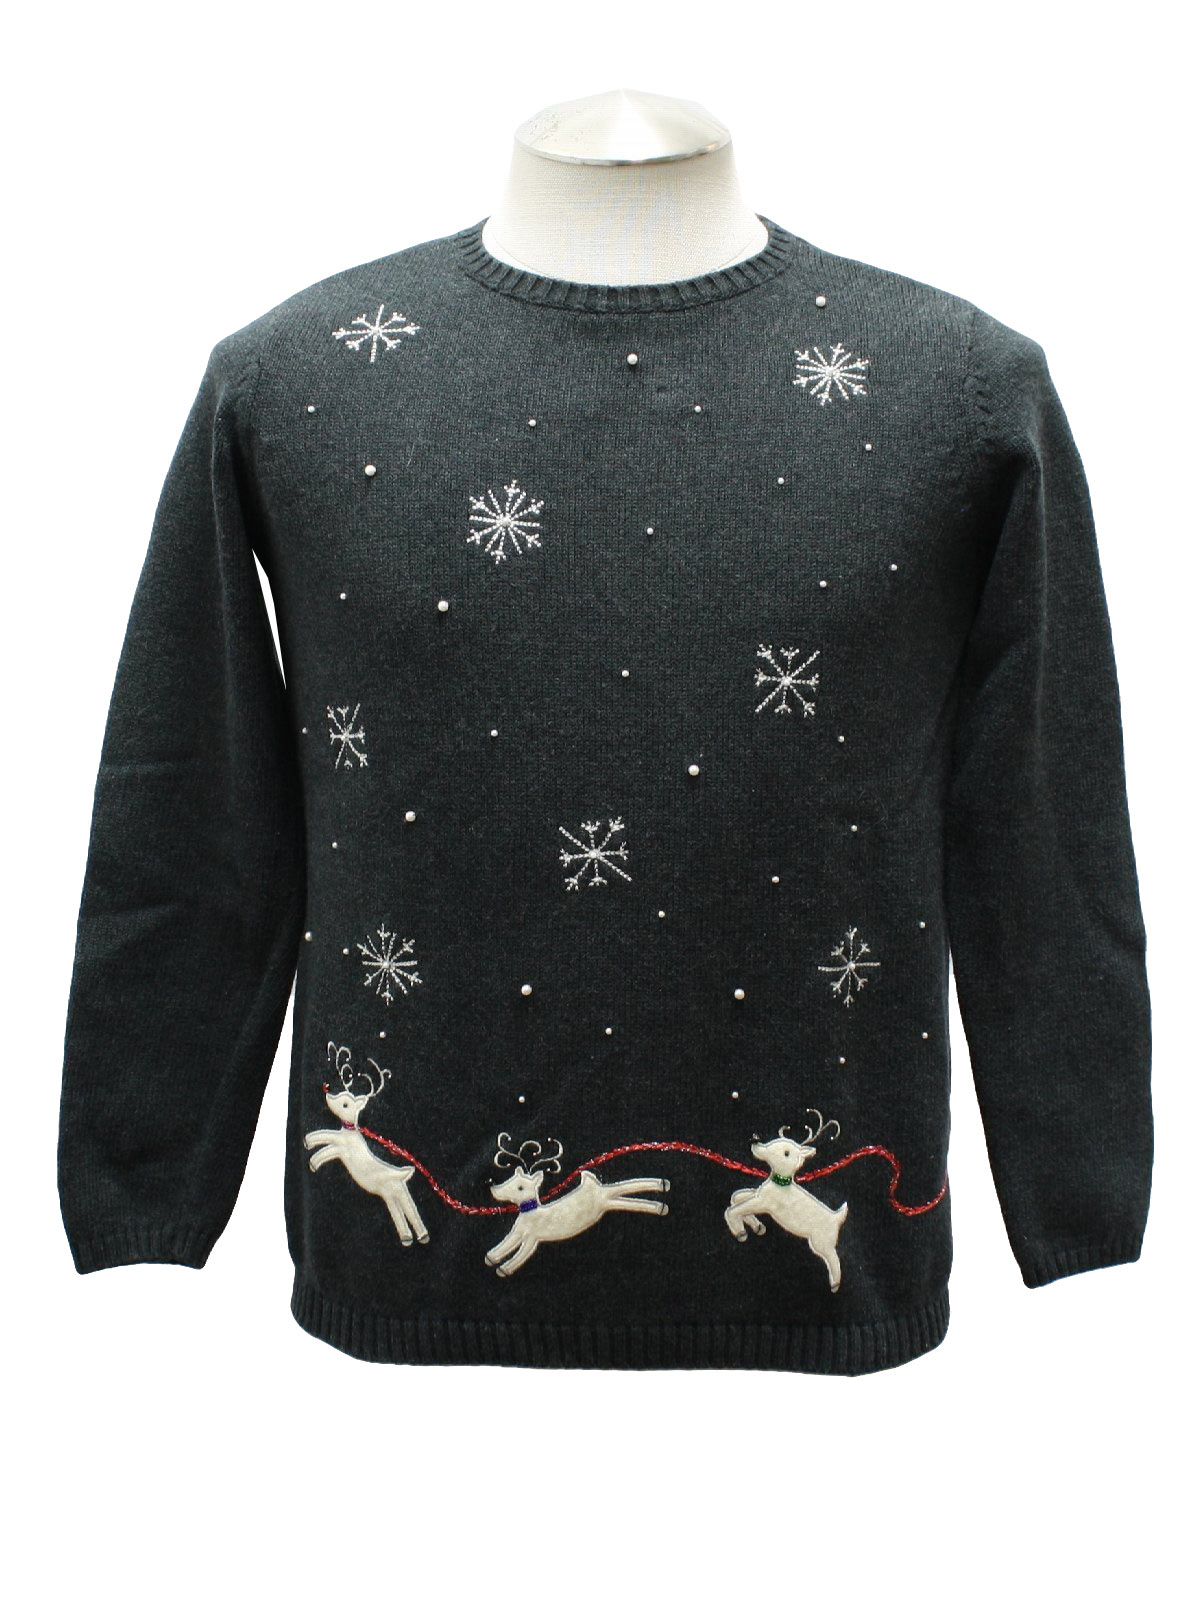 Womens Ugly Christmas Sweater: -Crazy Horse- Womens dark gray ...